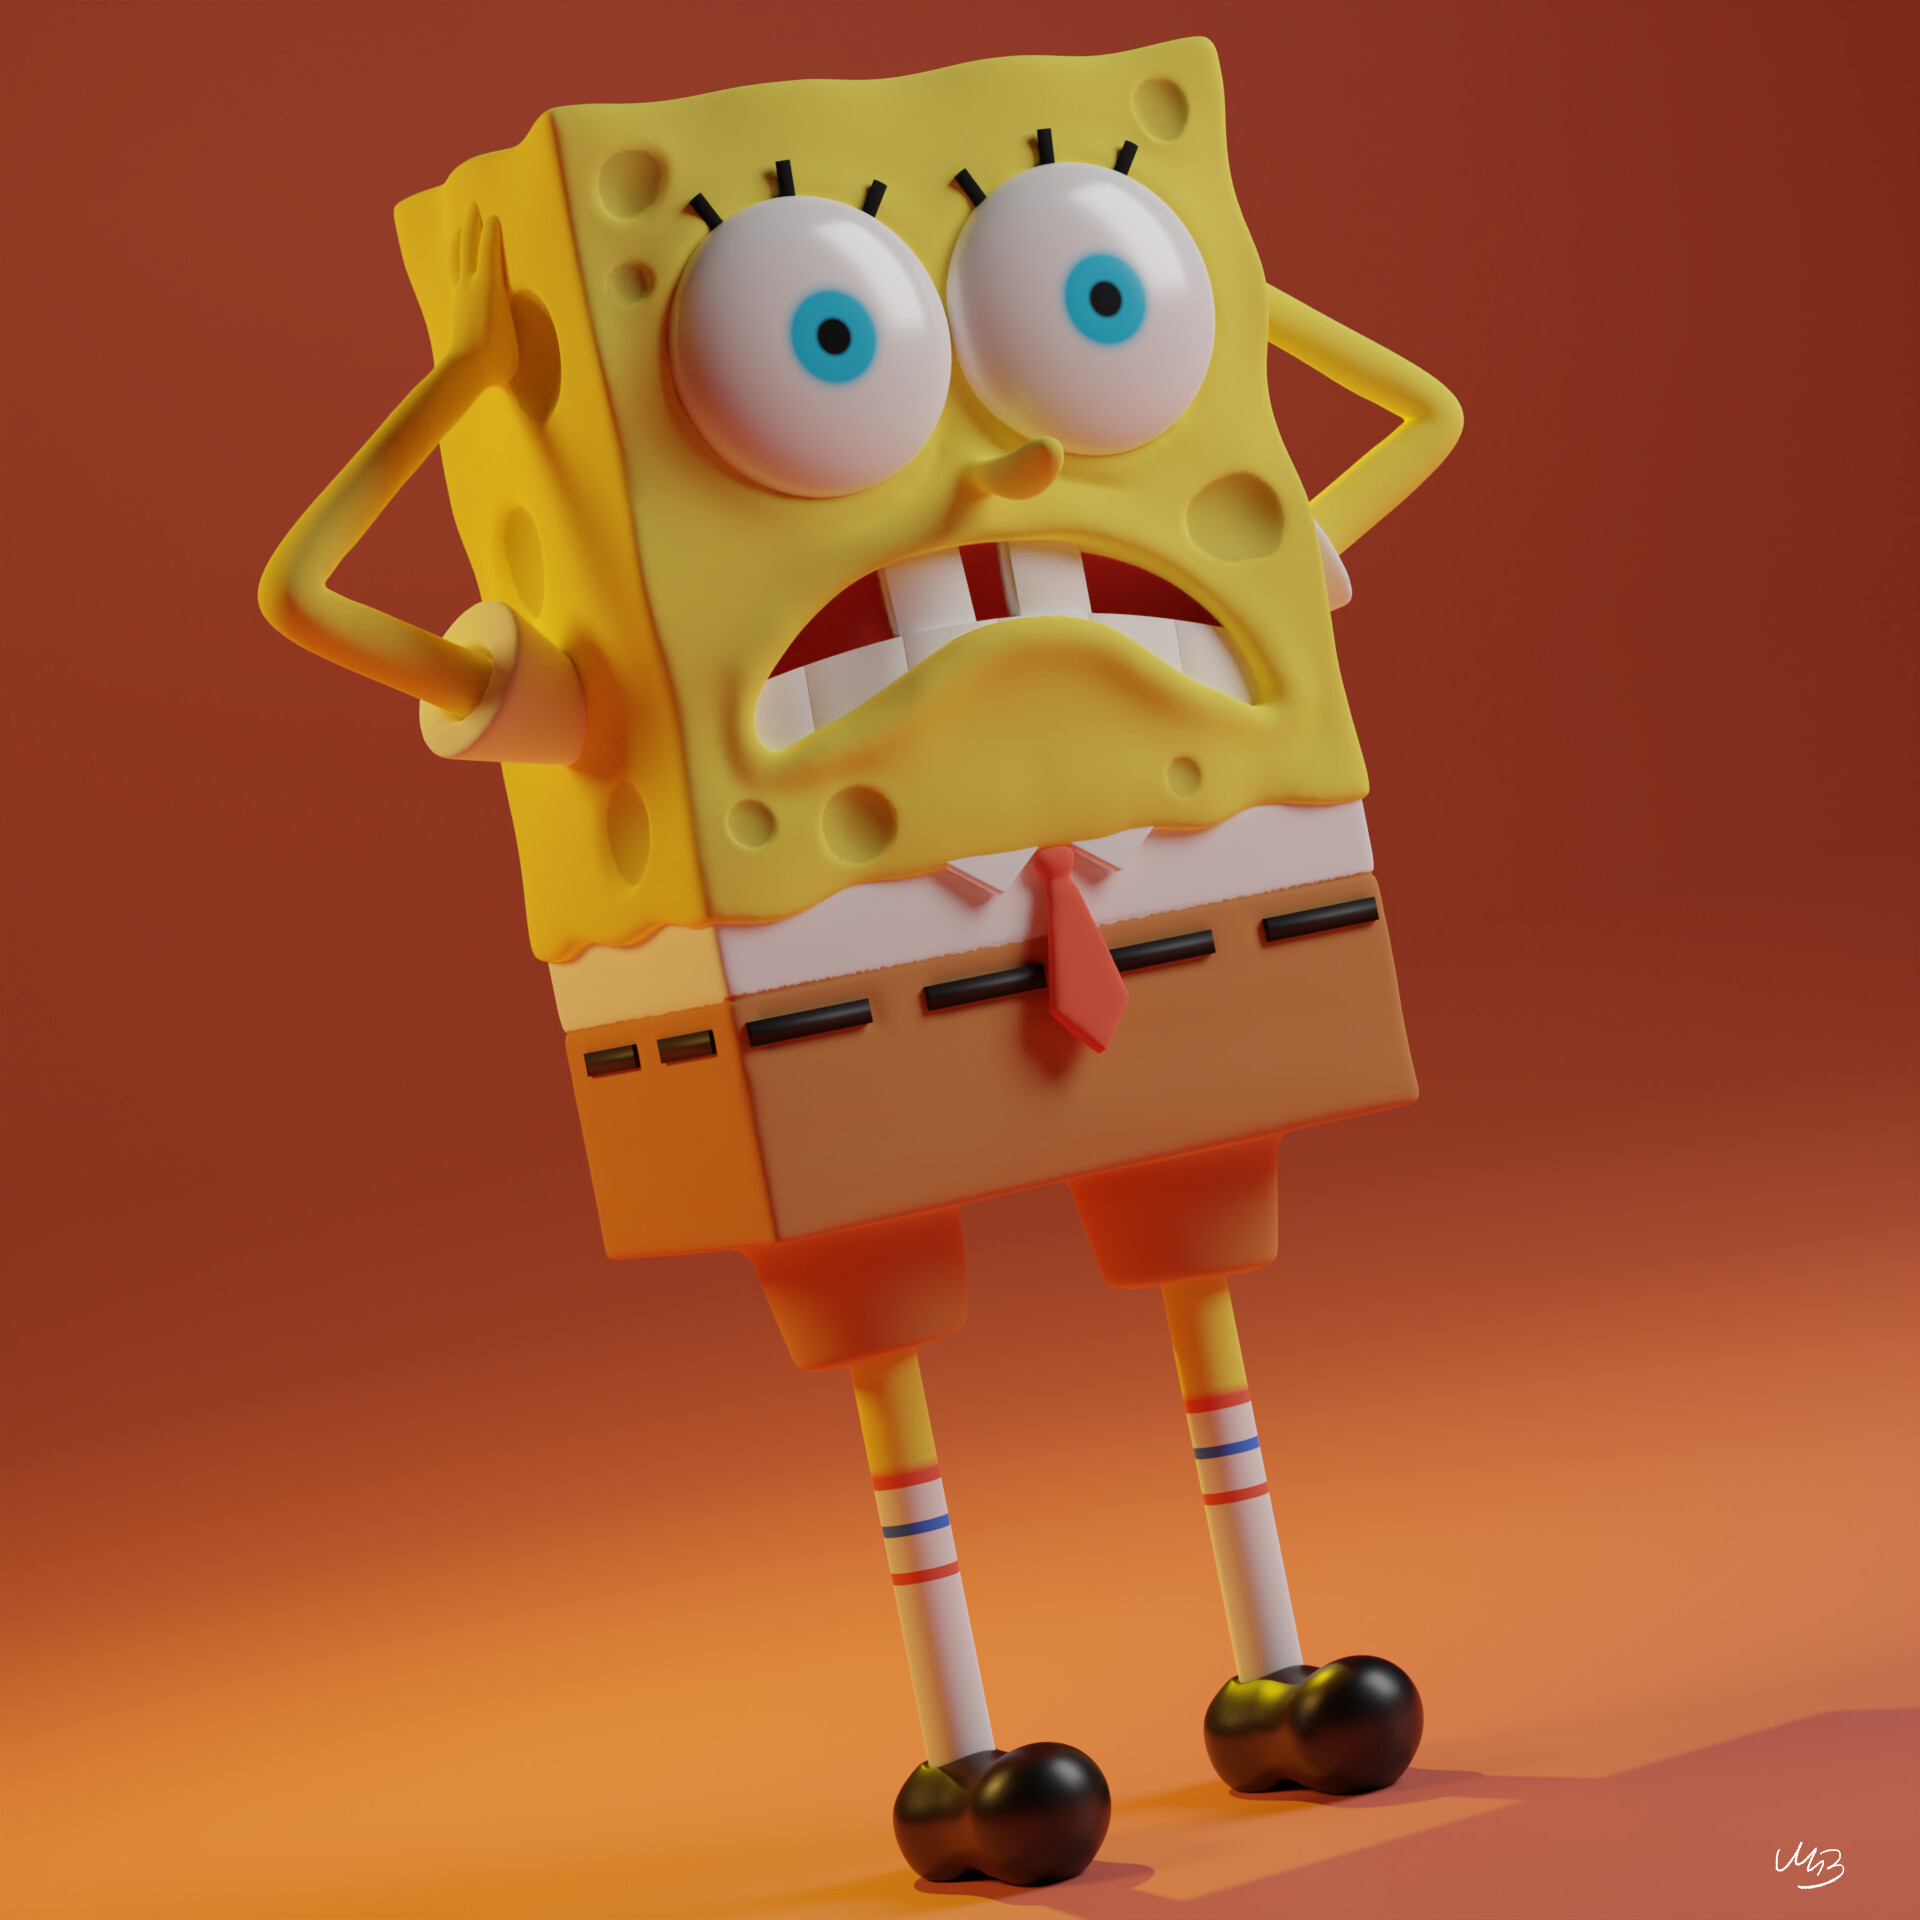 ArtStation - Nervous Spongebob, Mateusz Baranowski